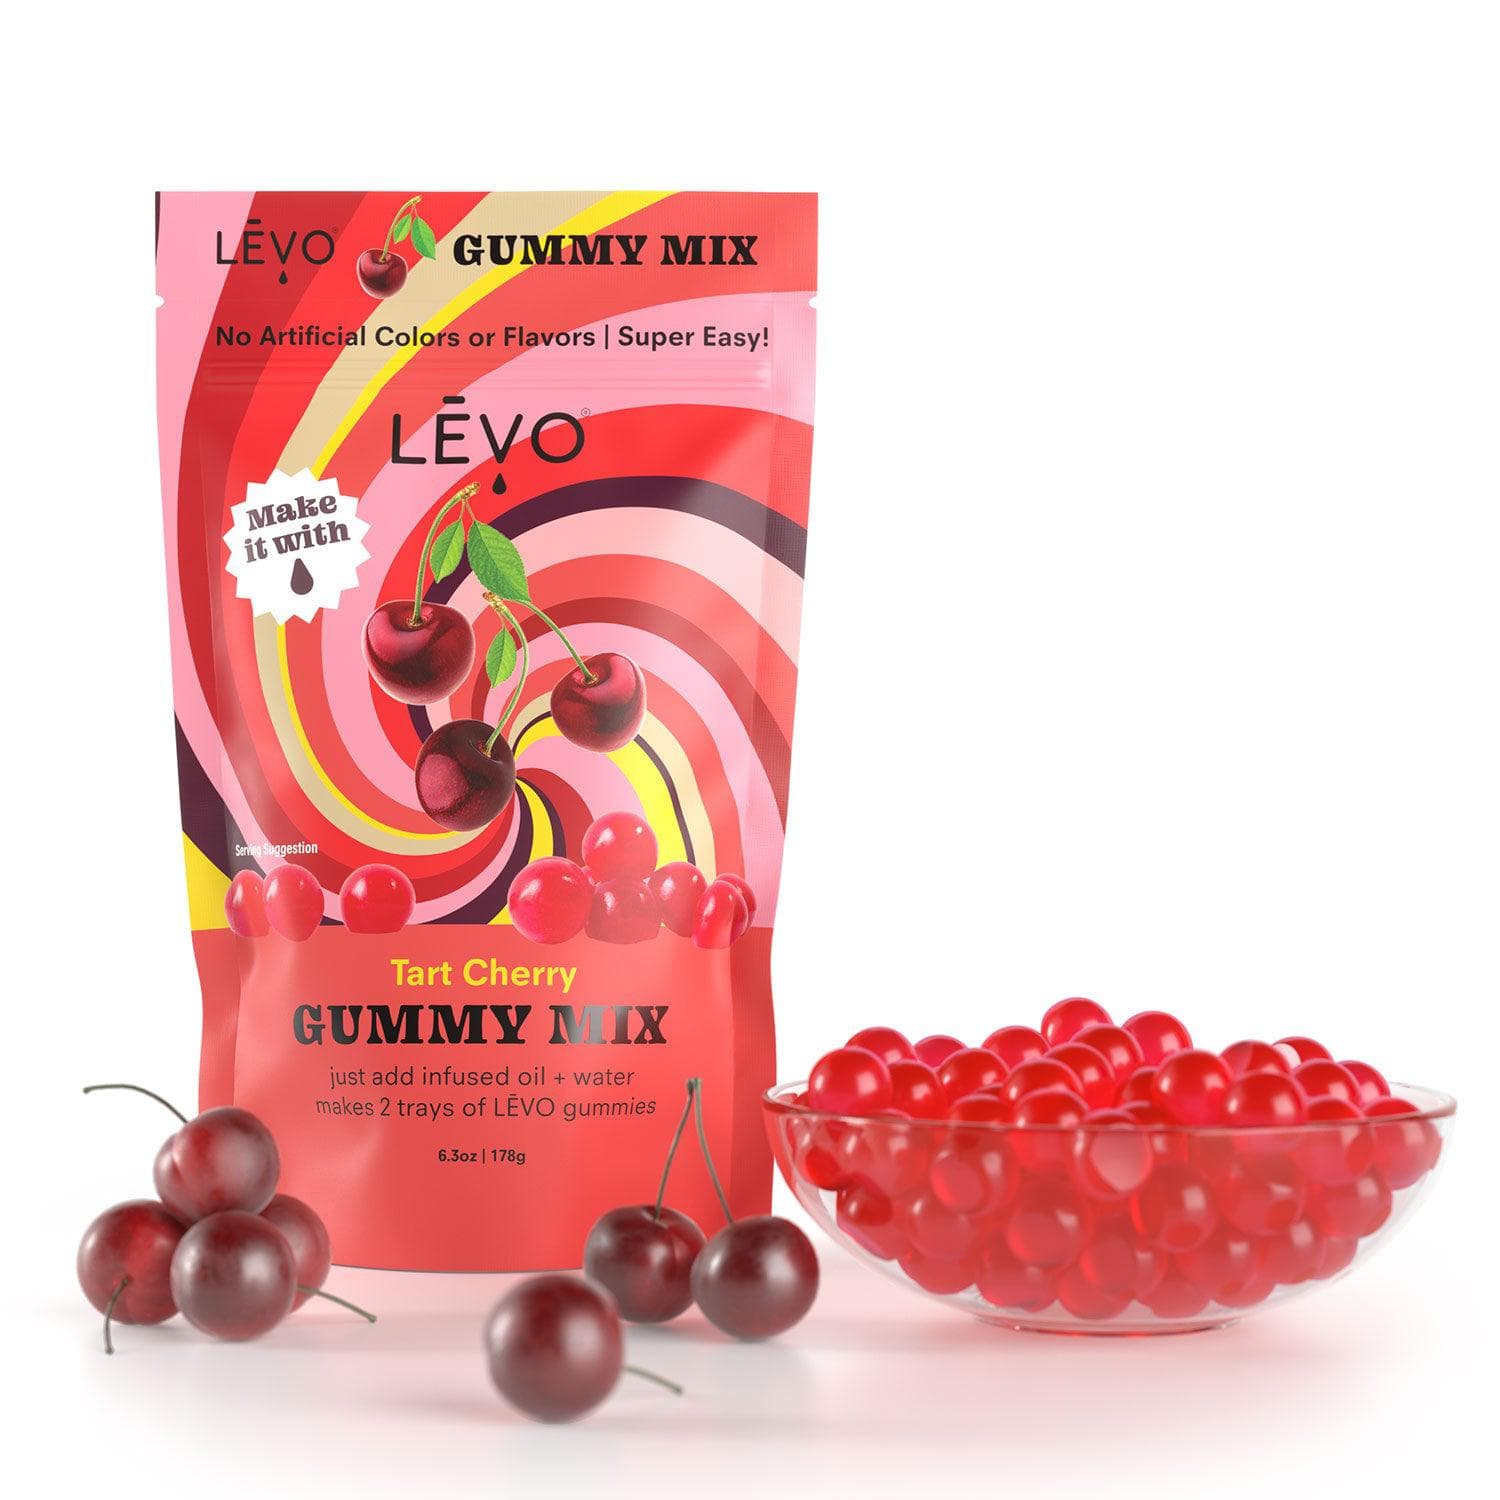 LEVO Gummy mix in tart cherry. Tart Cherry Gummy Mix - Indulge in the irresistible tangy flavor of tart cherries with this LĒVO gummy mix.